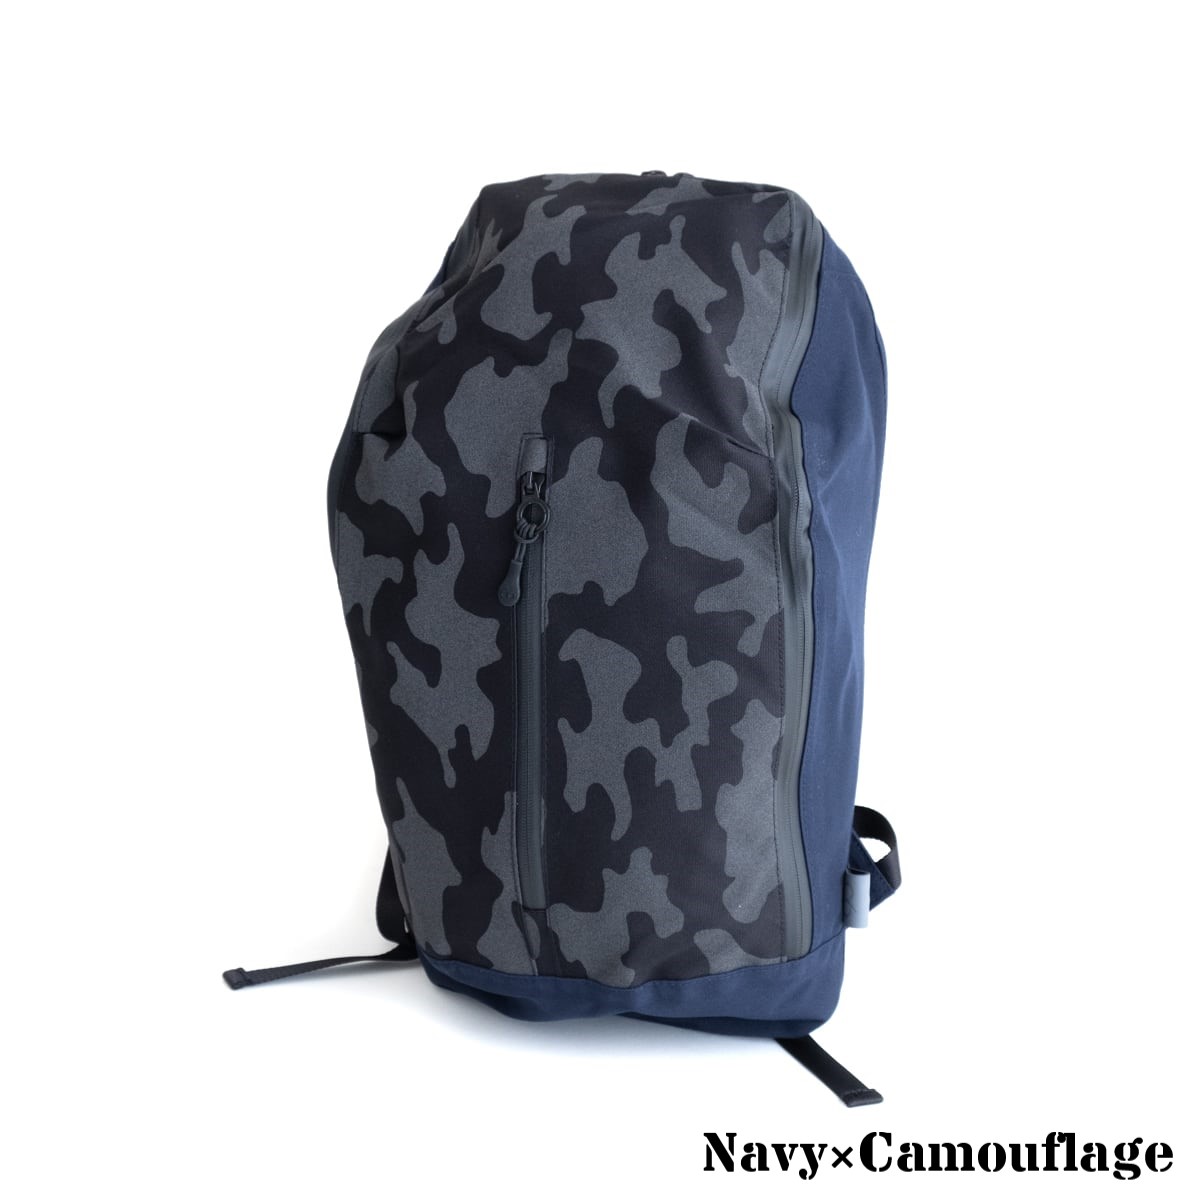 C6 Splinter Cell 最新号掲載アイテム Backpack 2色 Navy×Camouflage All Navy C1747 メンズ バックパック シーシックス 送料無料 完売 ラップトップケース バッグ 男女兼用 ユニセックス C1748